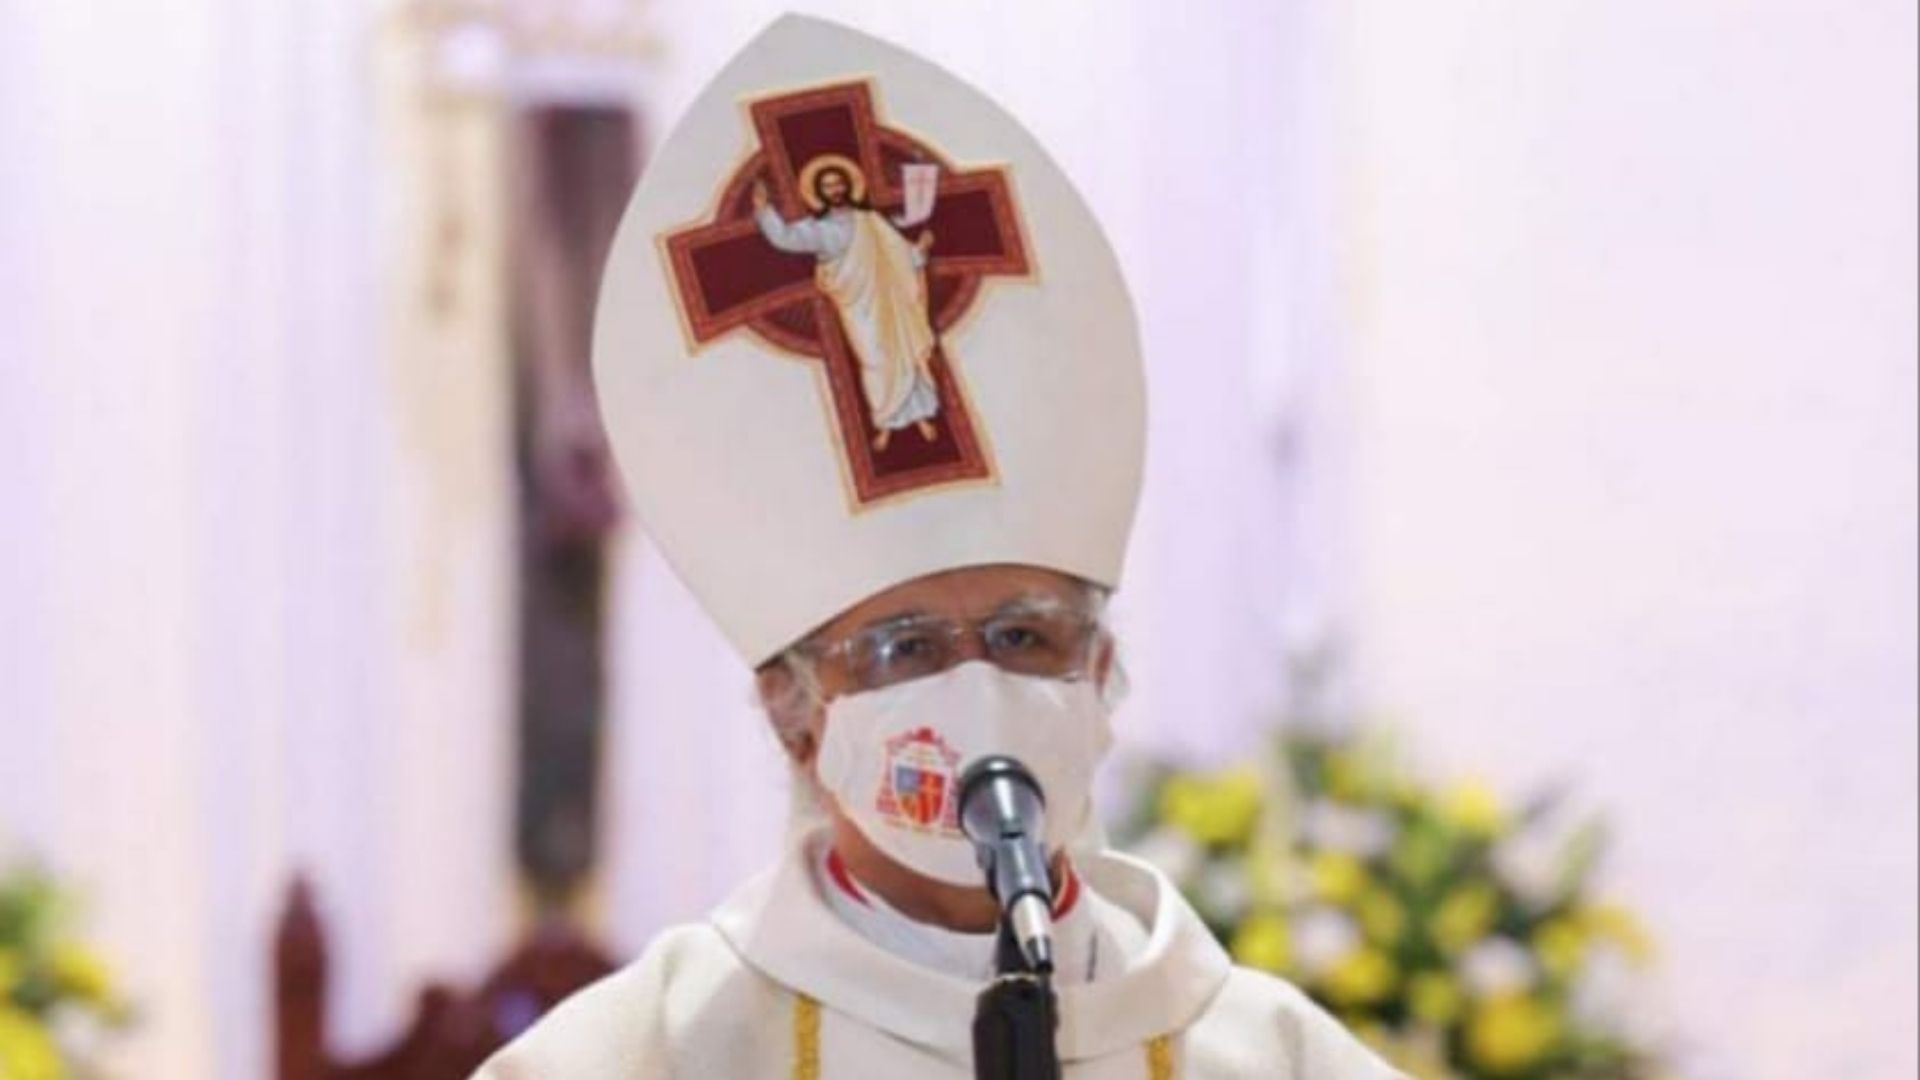 Cardinal Brenes calls on Nicaraguans to seek peace and avoid "wars"